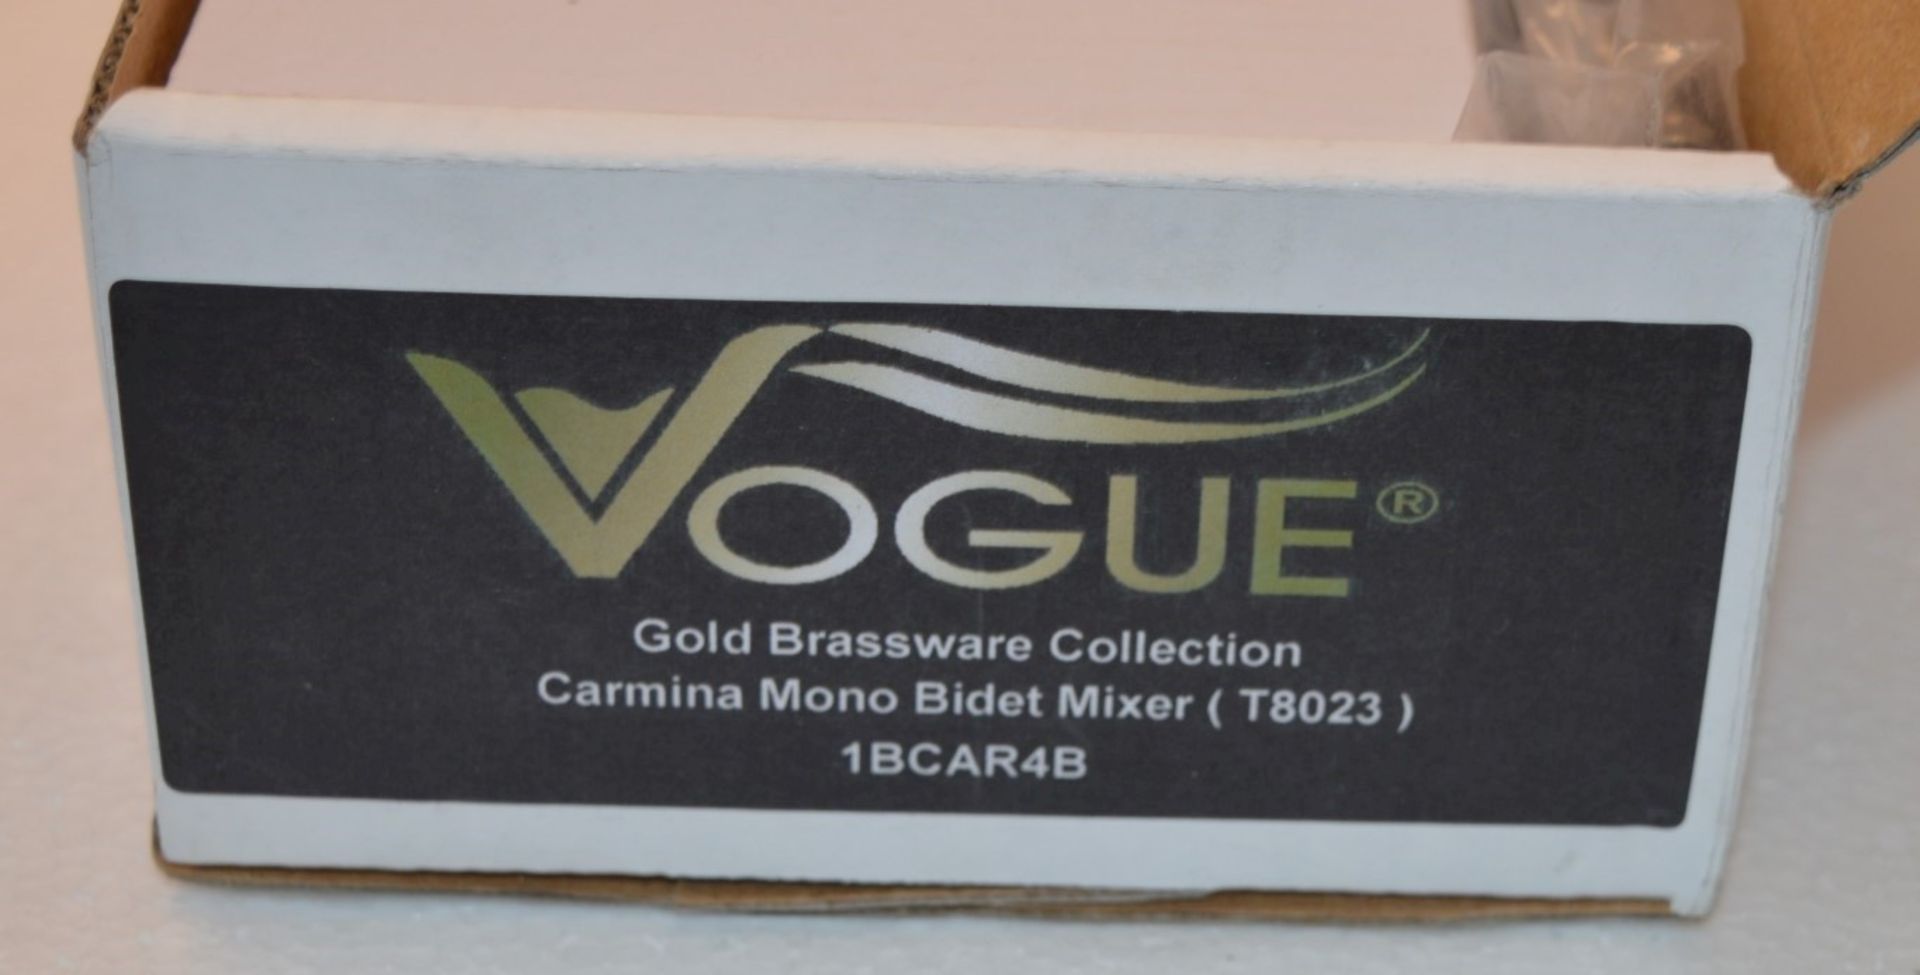 1 x Vogue Carmina Mono Bidet Mixer Tap - Vogue Bathrooms Gold Brassware Collection - High Quality - Image 6 of 7